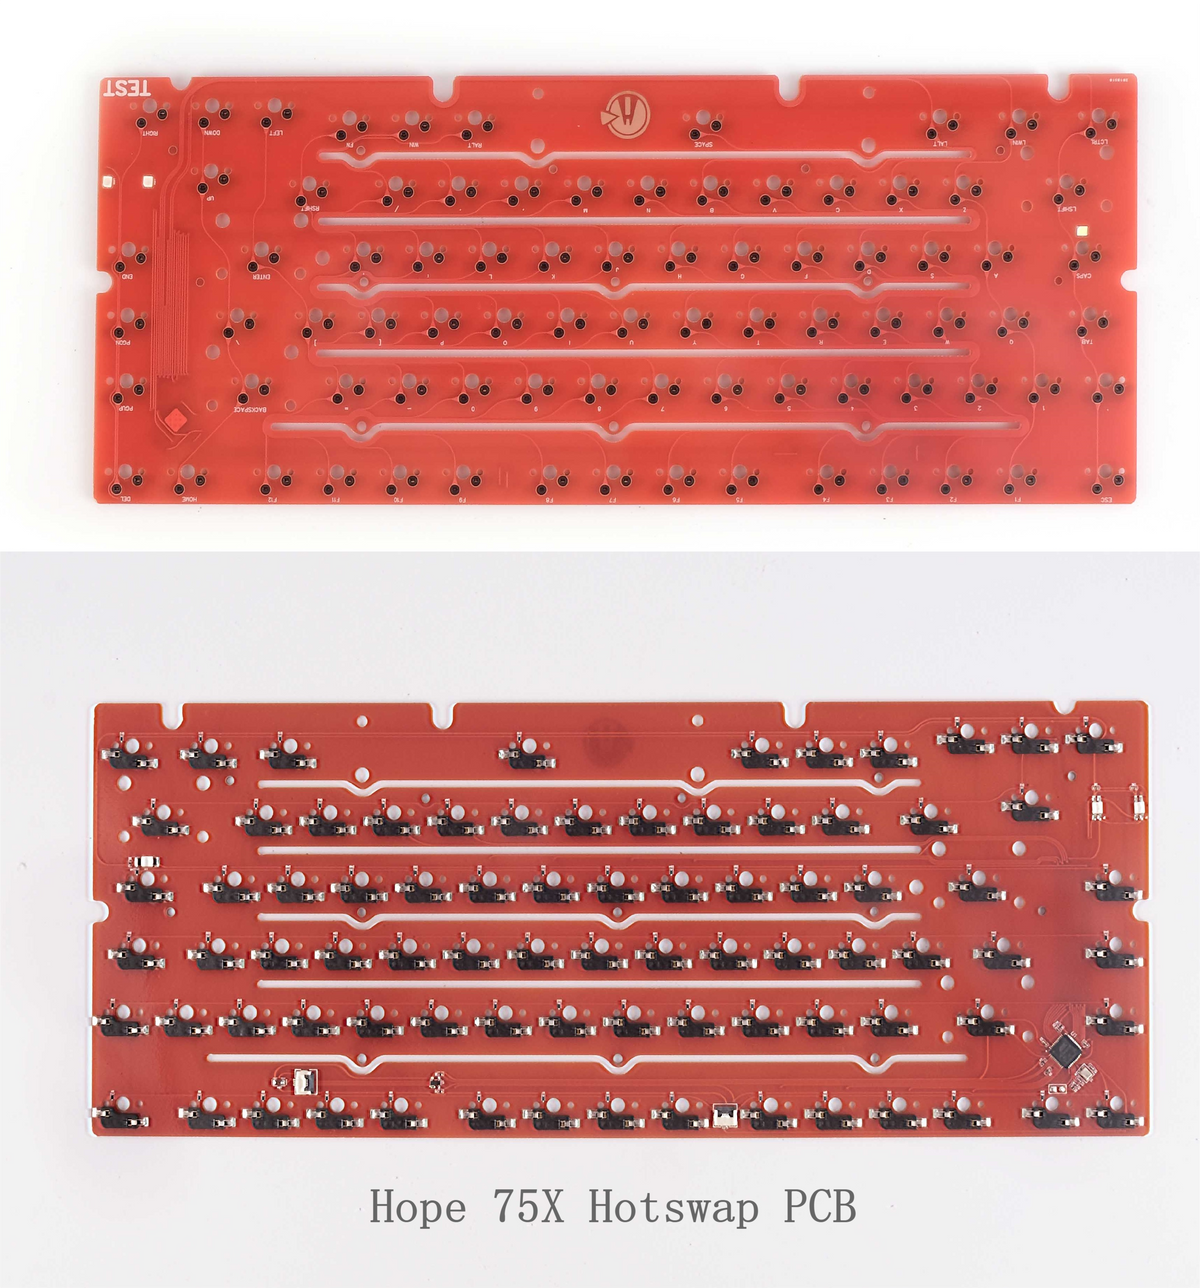 [GB] Hope75 X Keyboard Kit - Extras